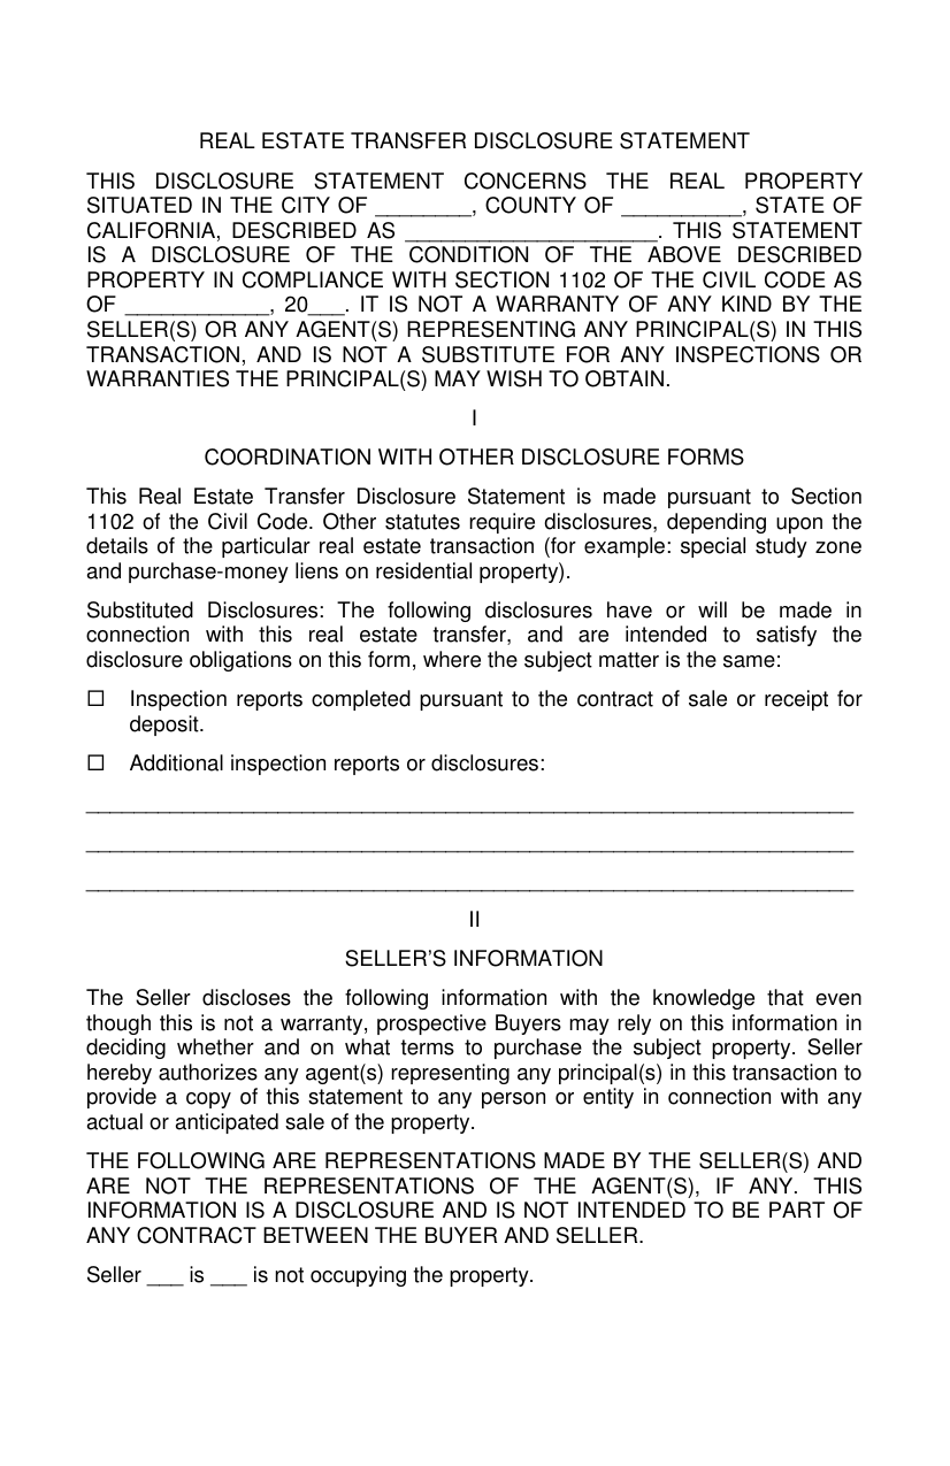 Real Estate Transfer Disclosure Statement - California, Page 1